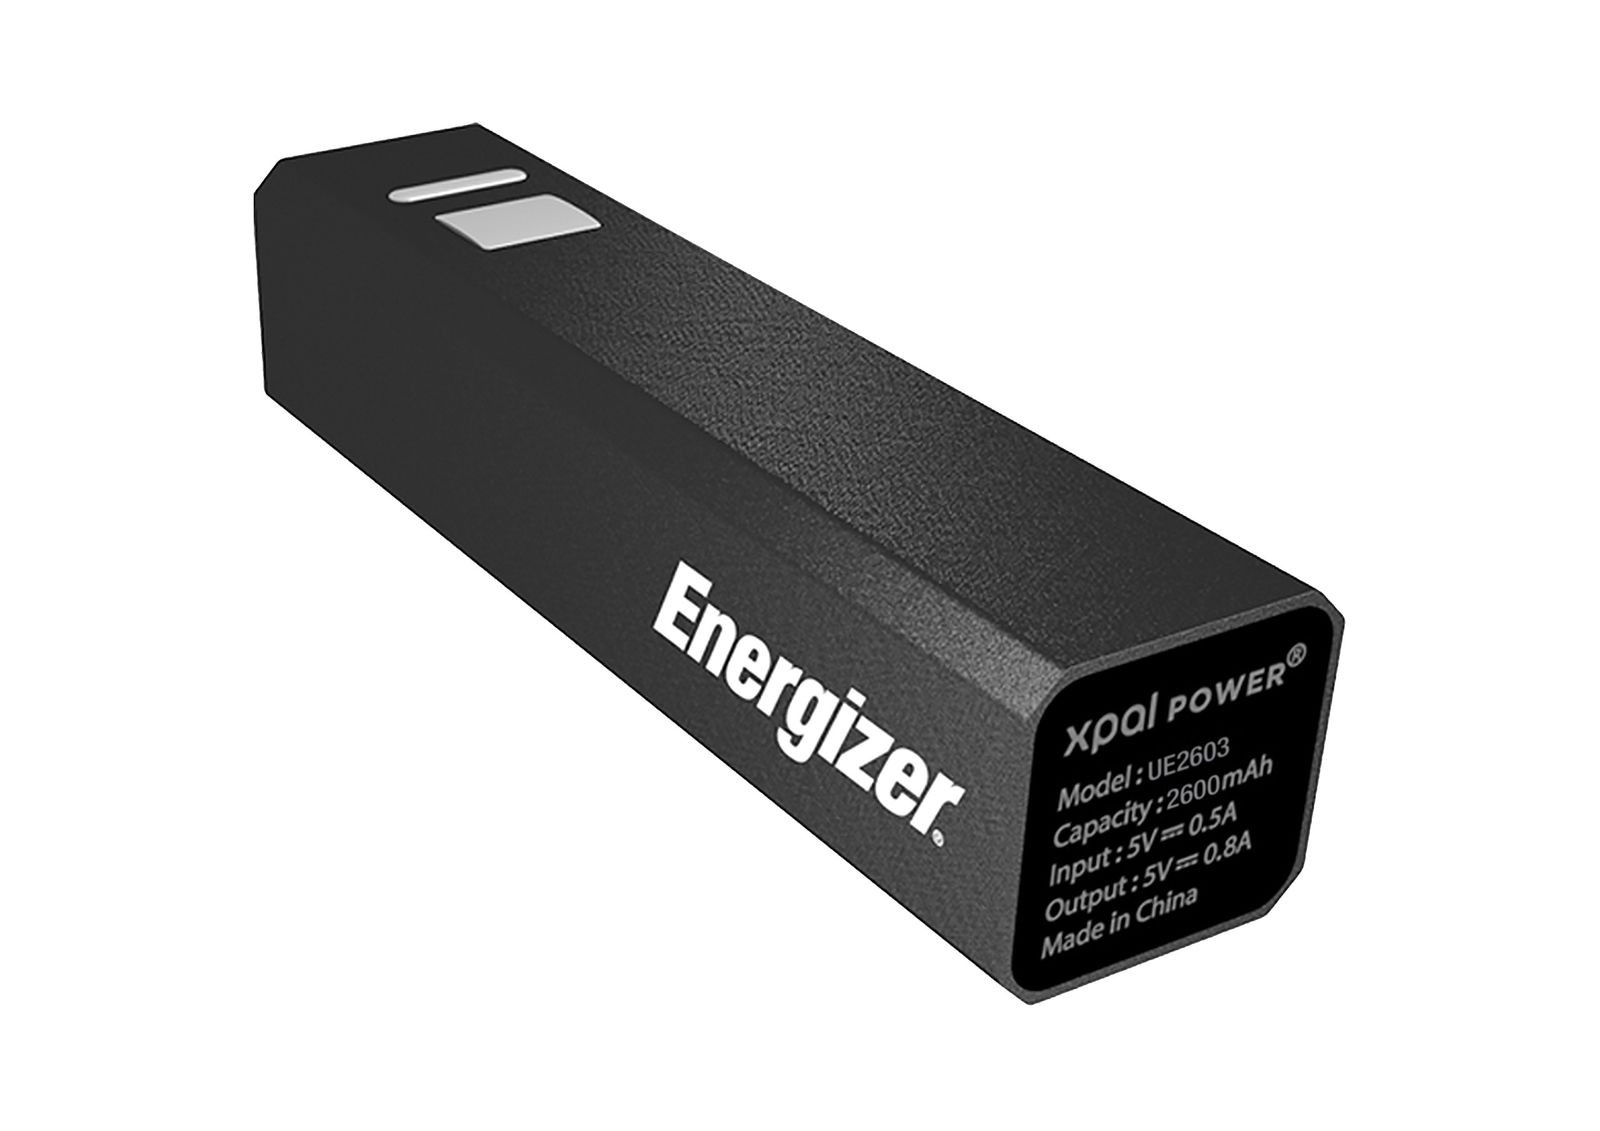 Energizer 2600 mAh MOBILE power bank / Portable Charger ...